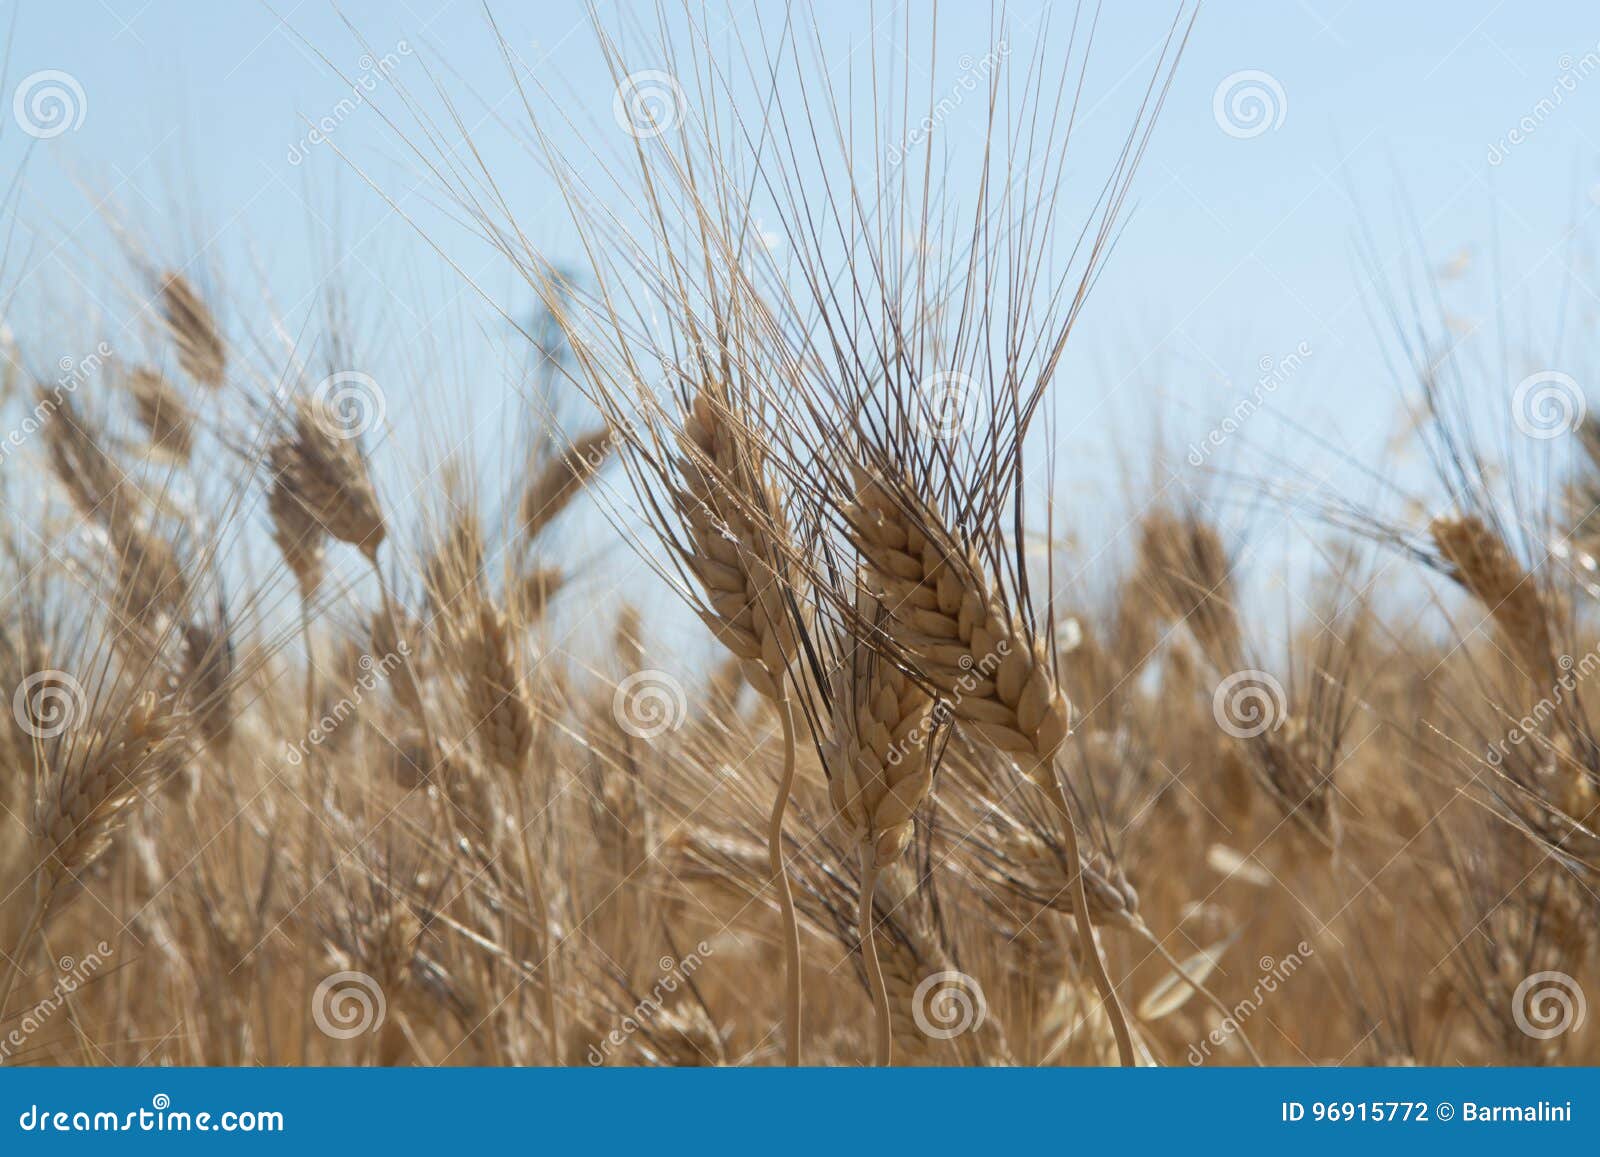 yellow fields with ripe hard wheat, grano duro, sicily, italy